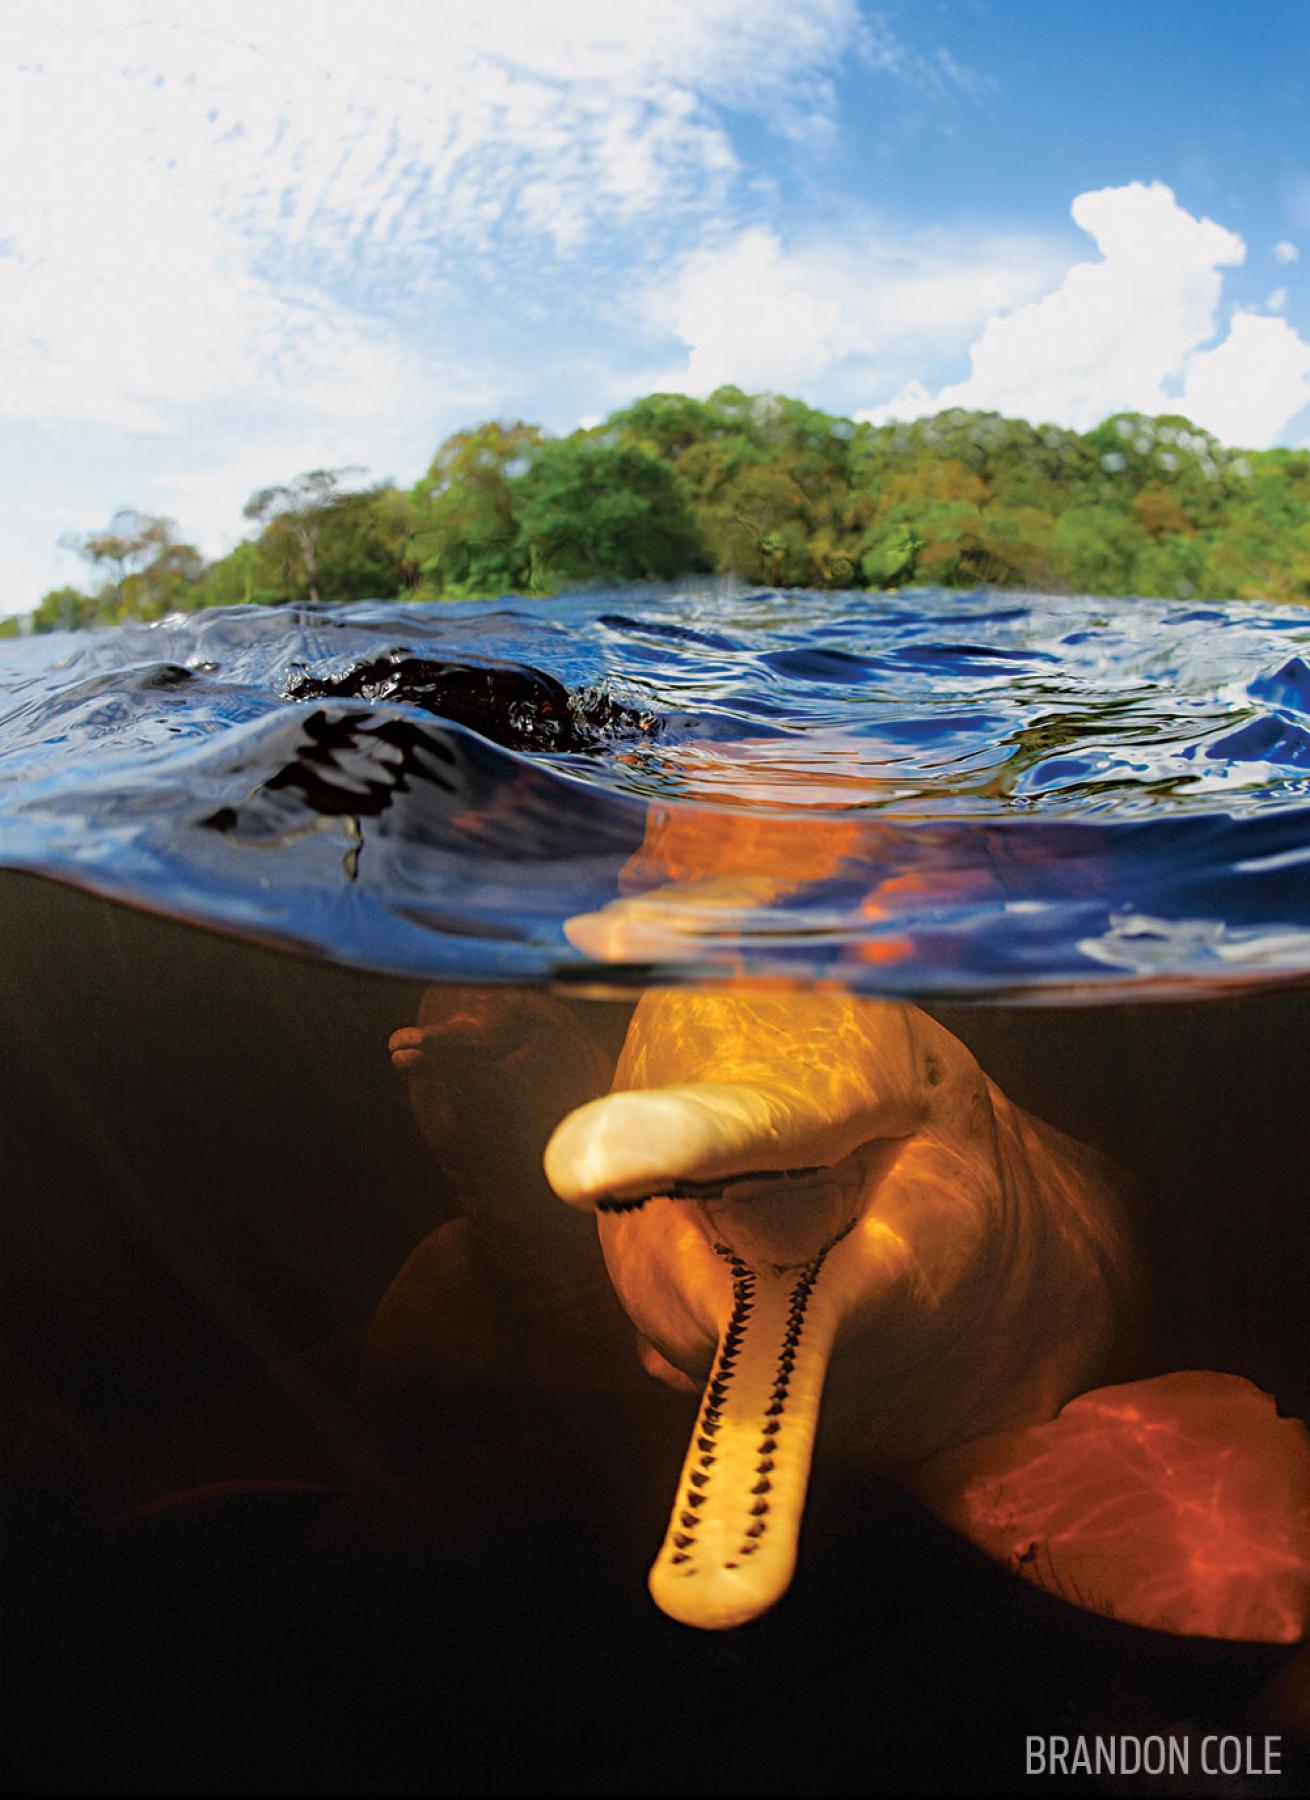 Pink Amazon River Dolphin Underwater in Brazil